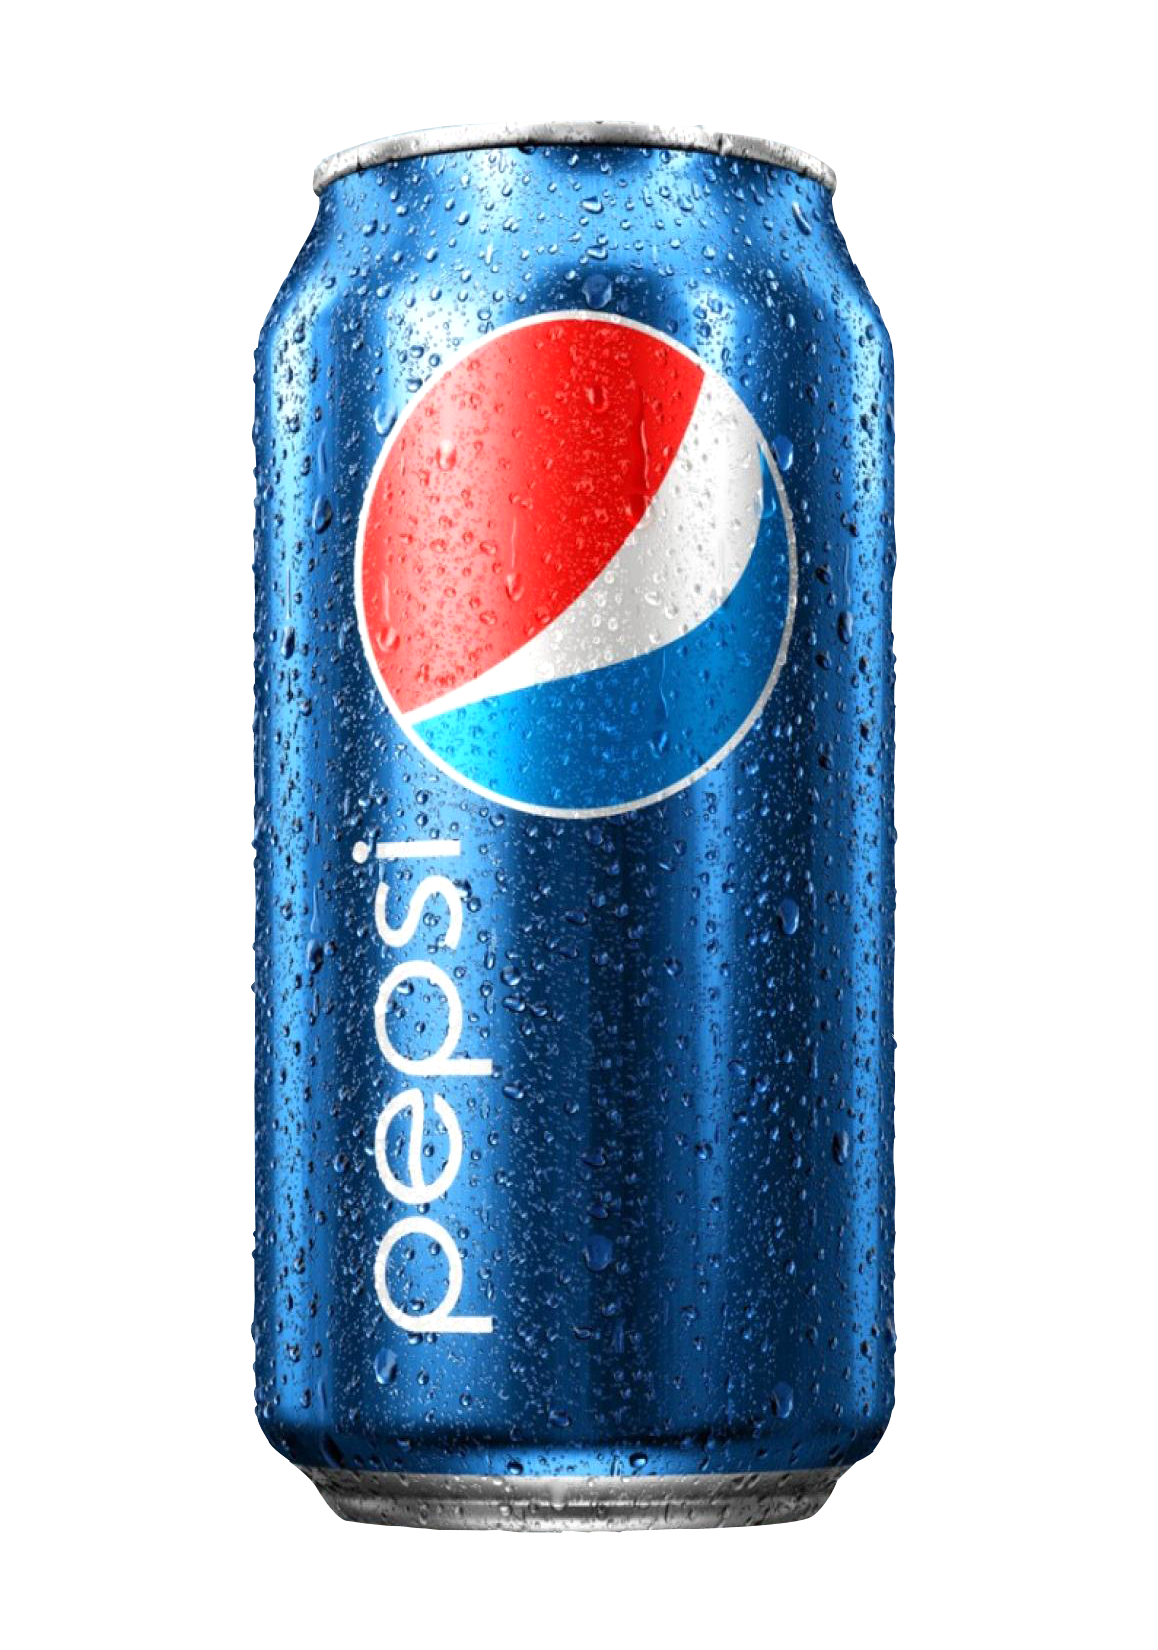 Pepsi PNG Image - PurePNG | Free transparent CC0 PNG Image Library